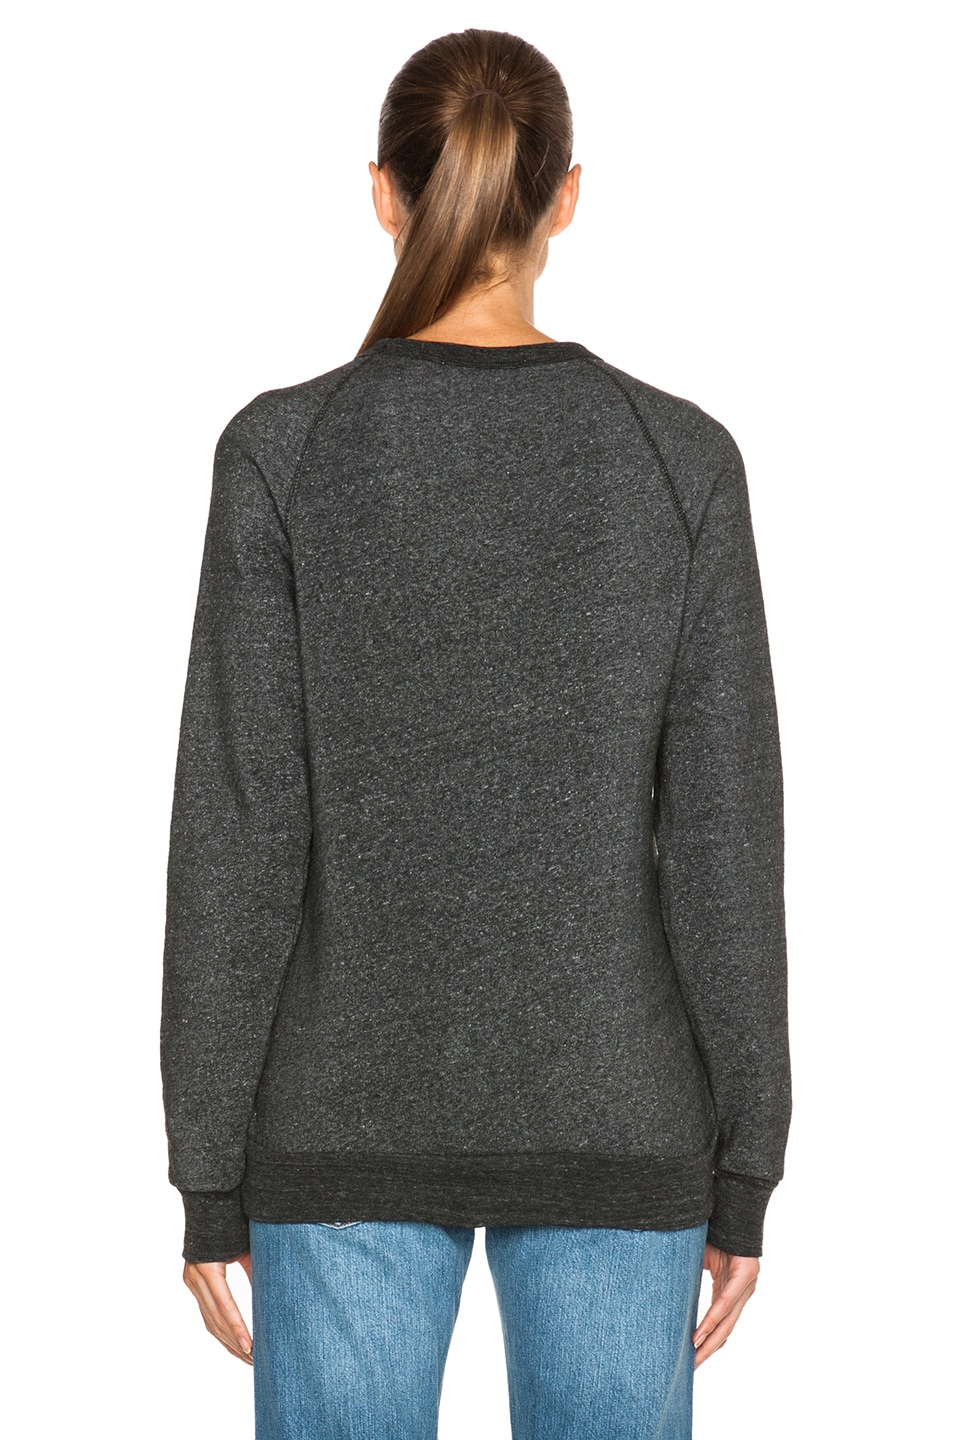 Rodarte Radarte Poly-Blend Sweatshirt in Black Heather | FWRD